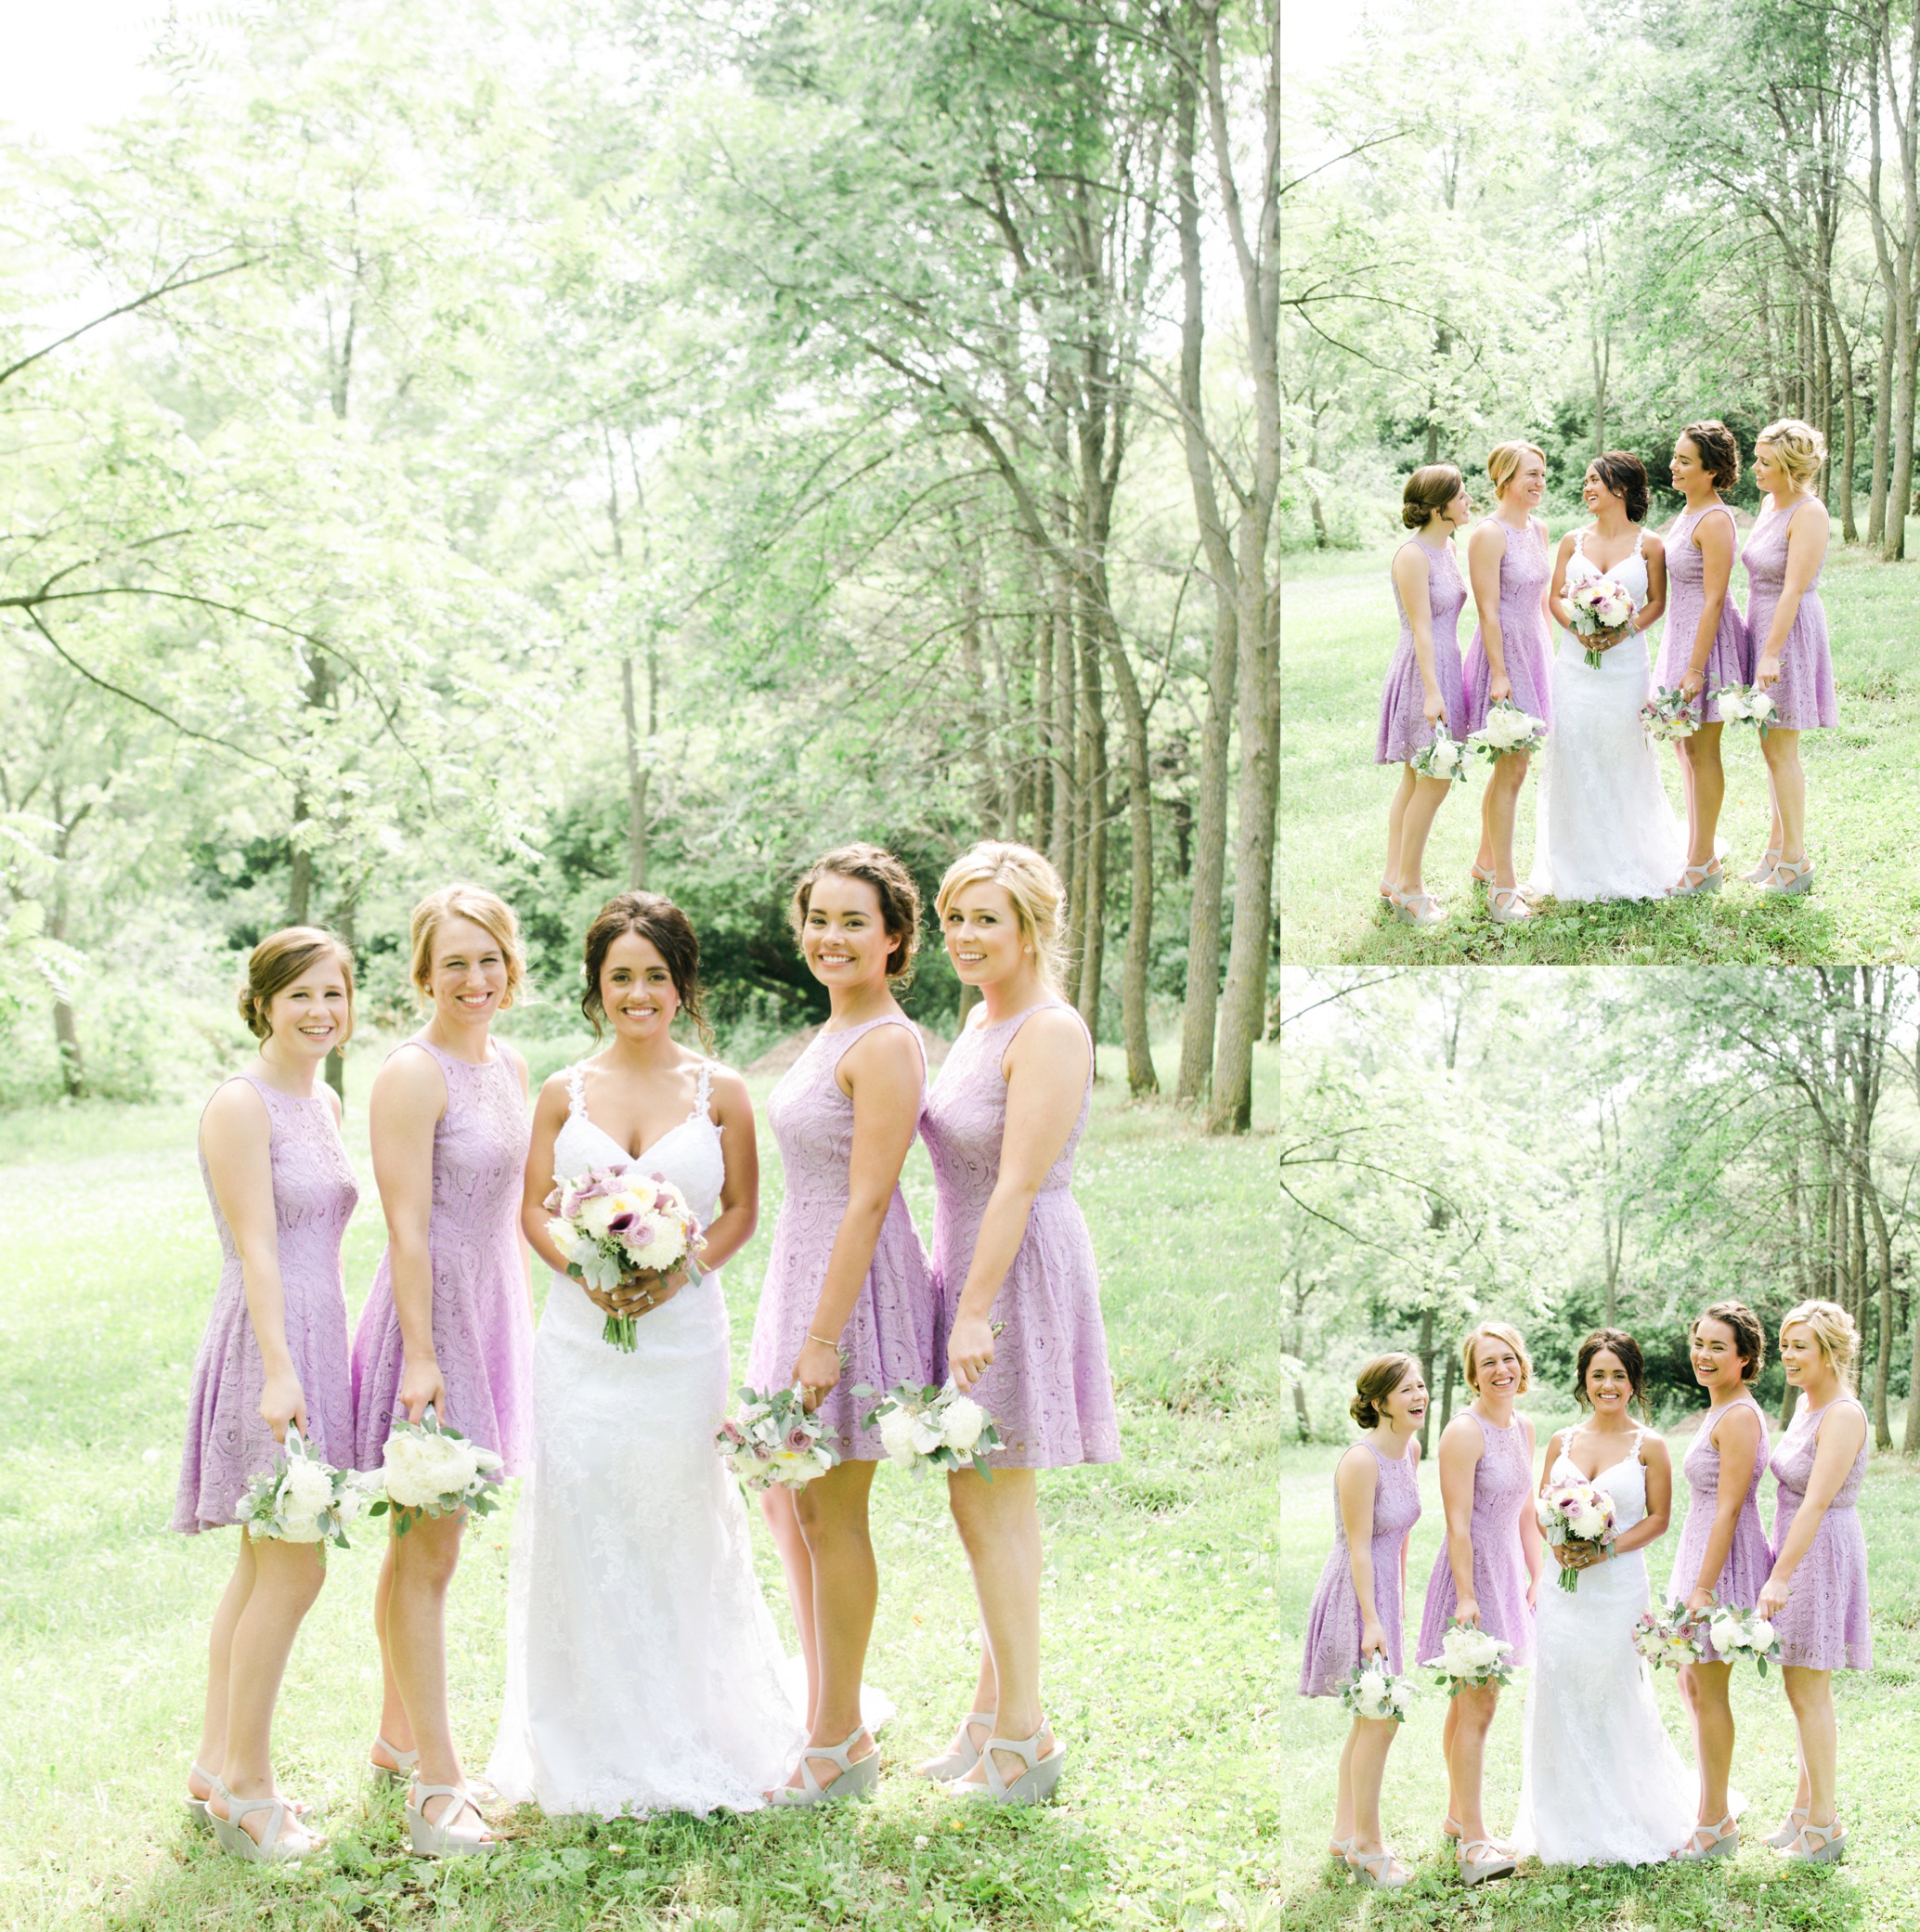 Barnes' Place Rustic Outdoor Wedding | Ali Leigh Photo Minneapolis Wedding Photographer_0111.jpg